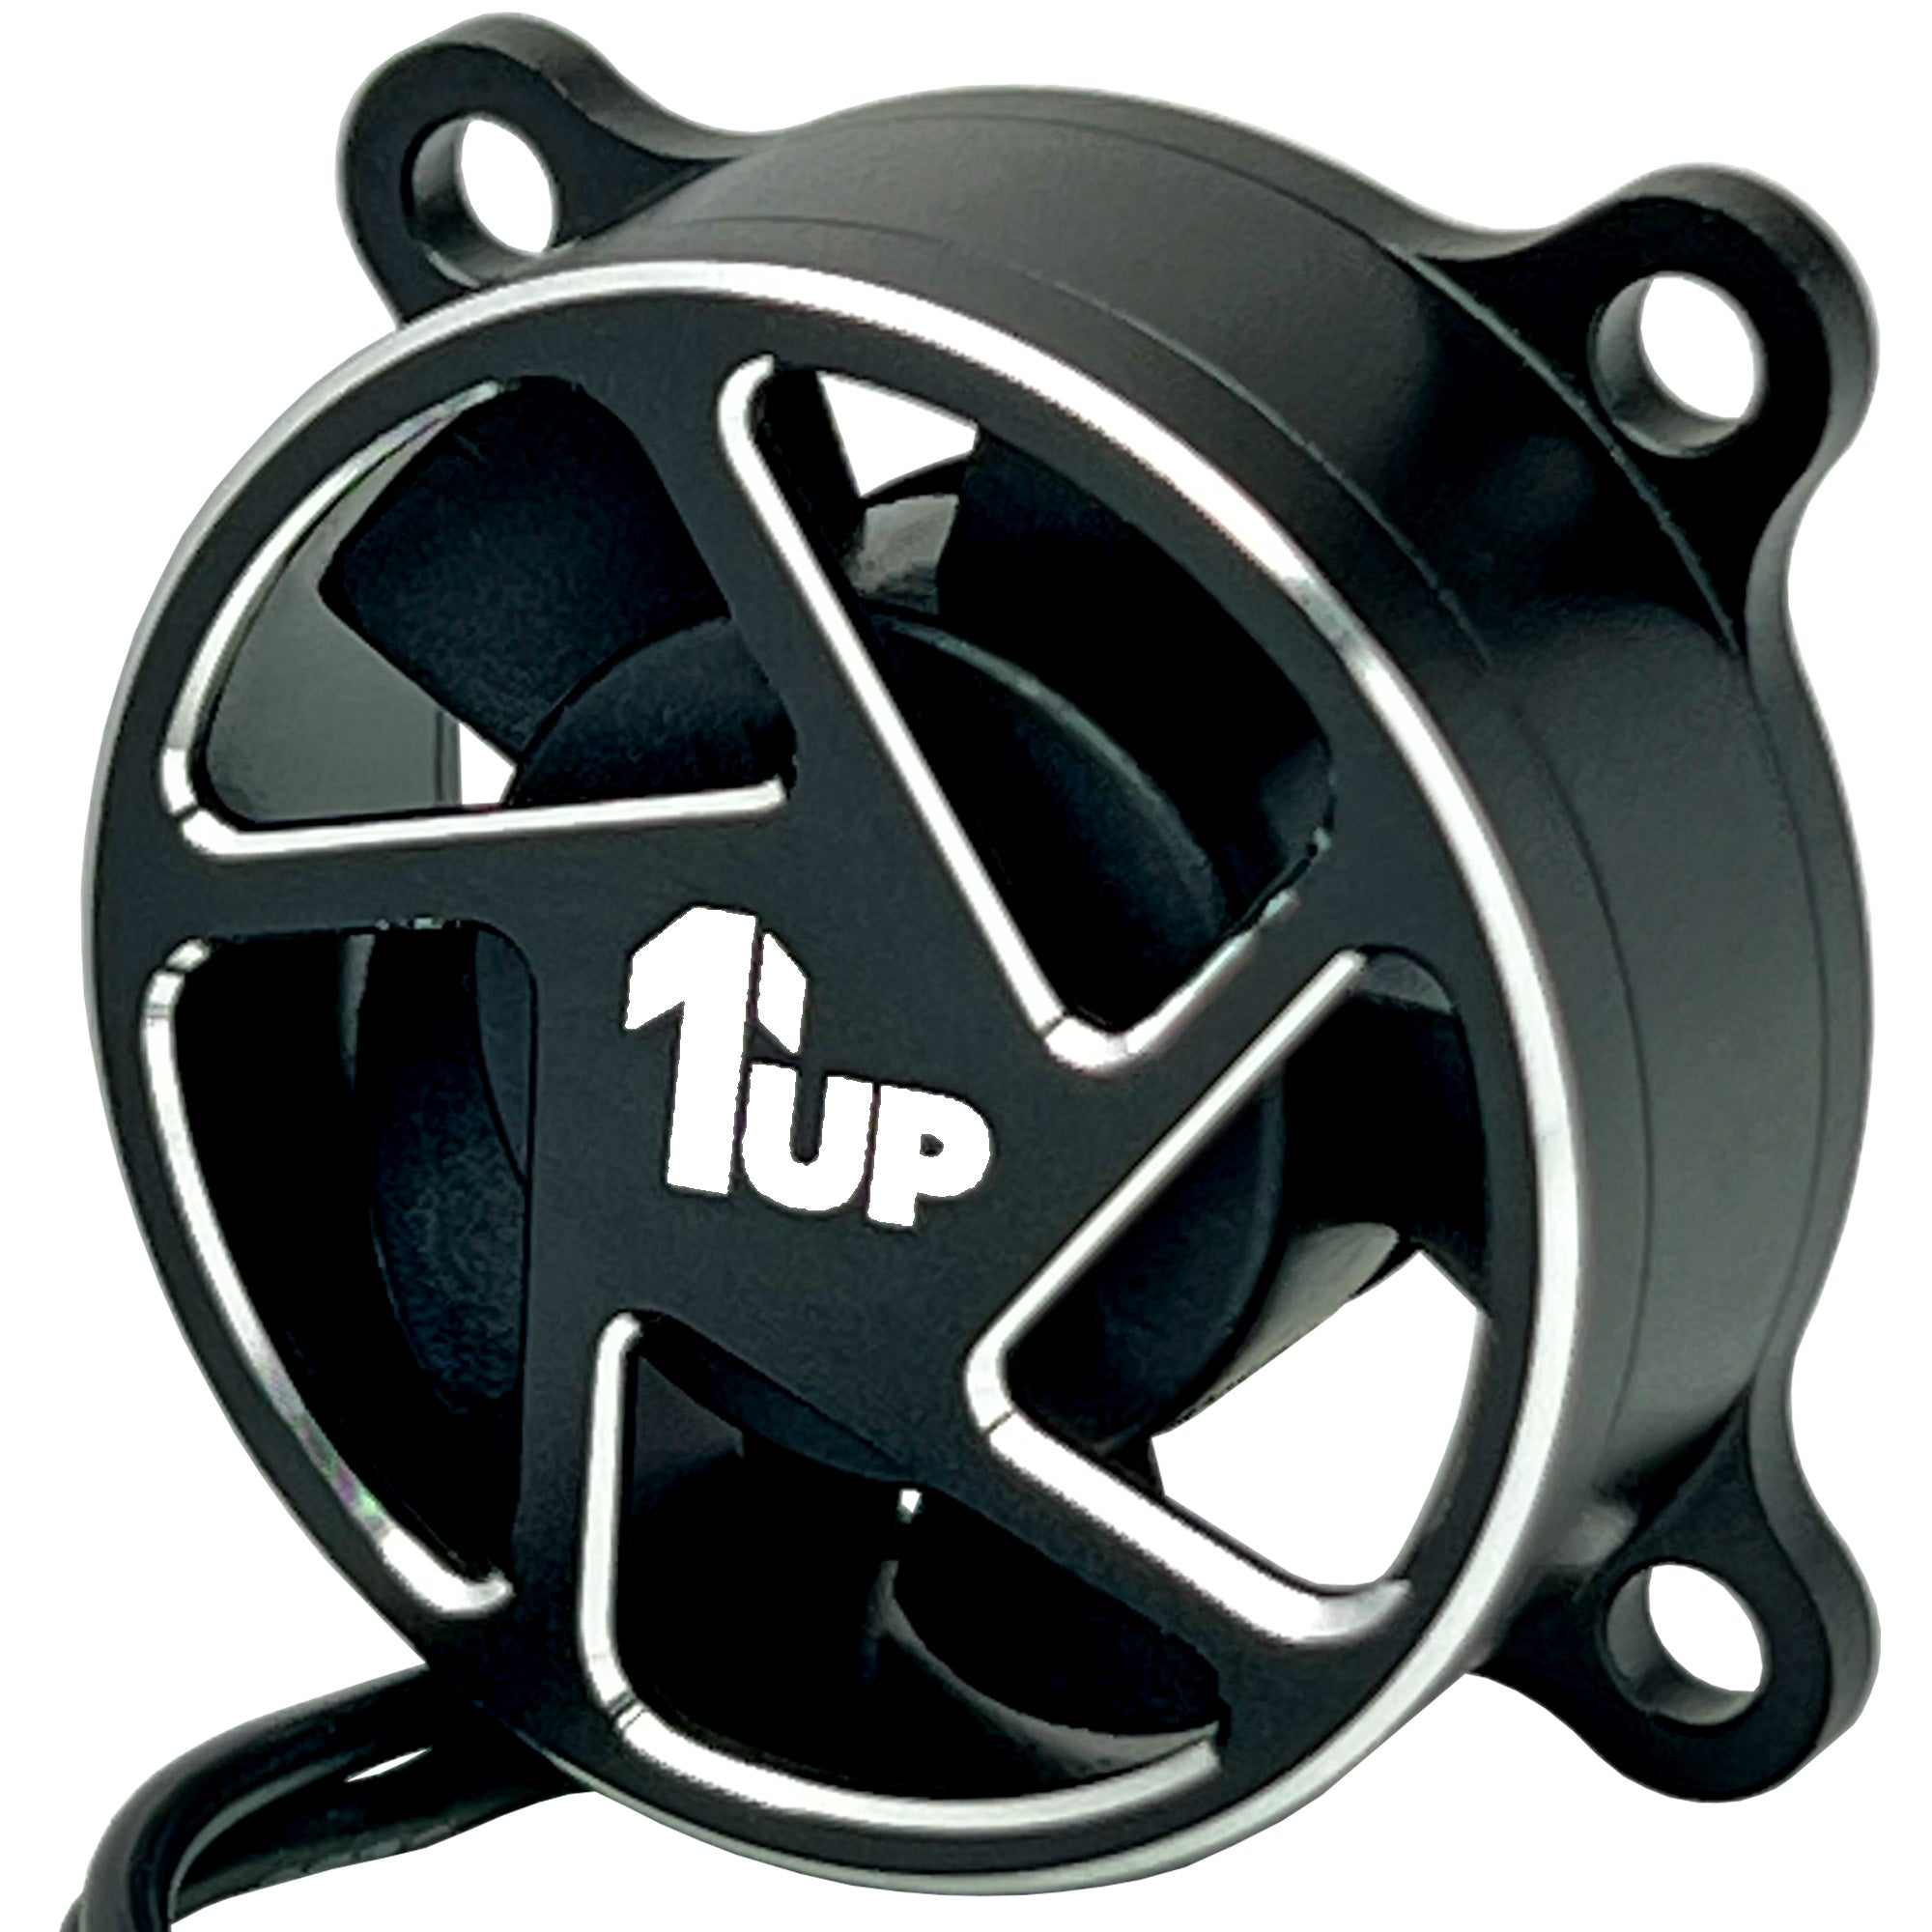 1up Racing: UltraLite 30mm High-Speed Aluminum Fan w/ Guard